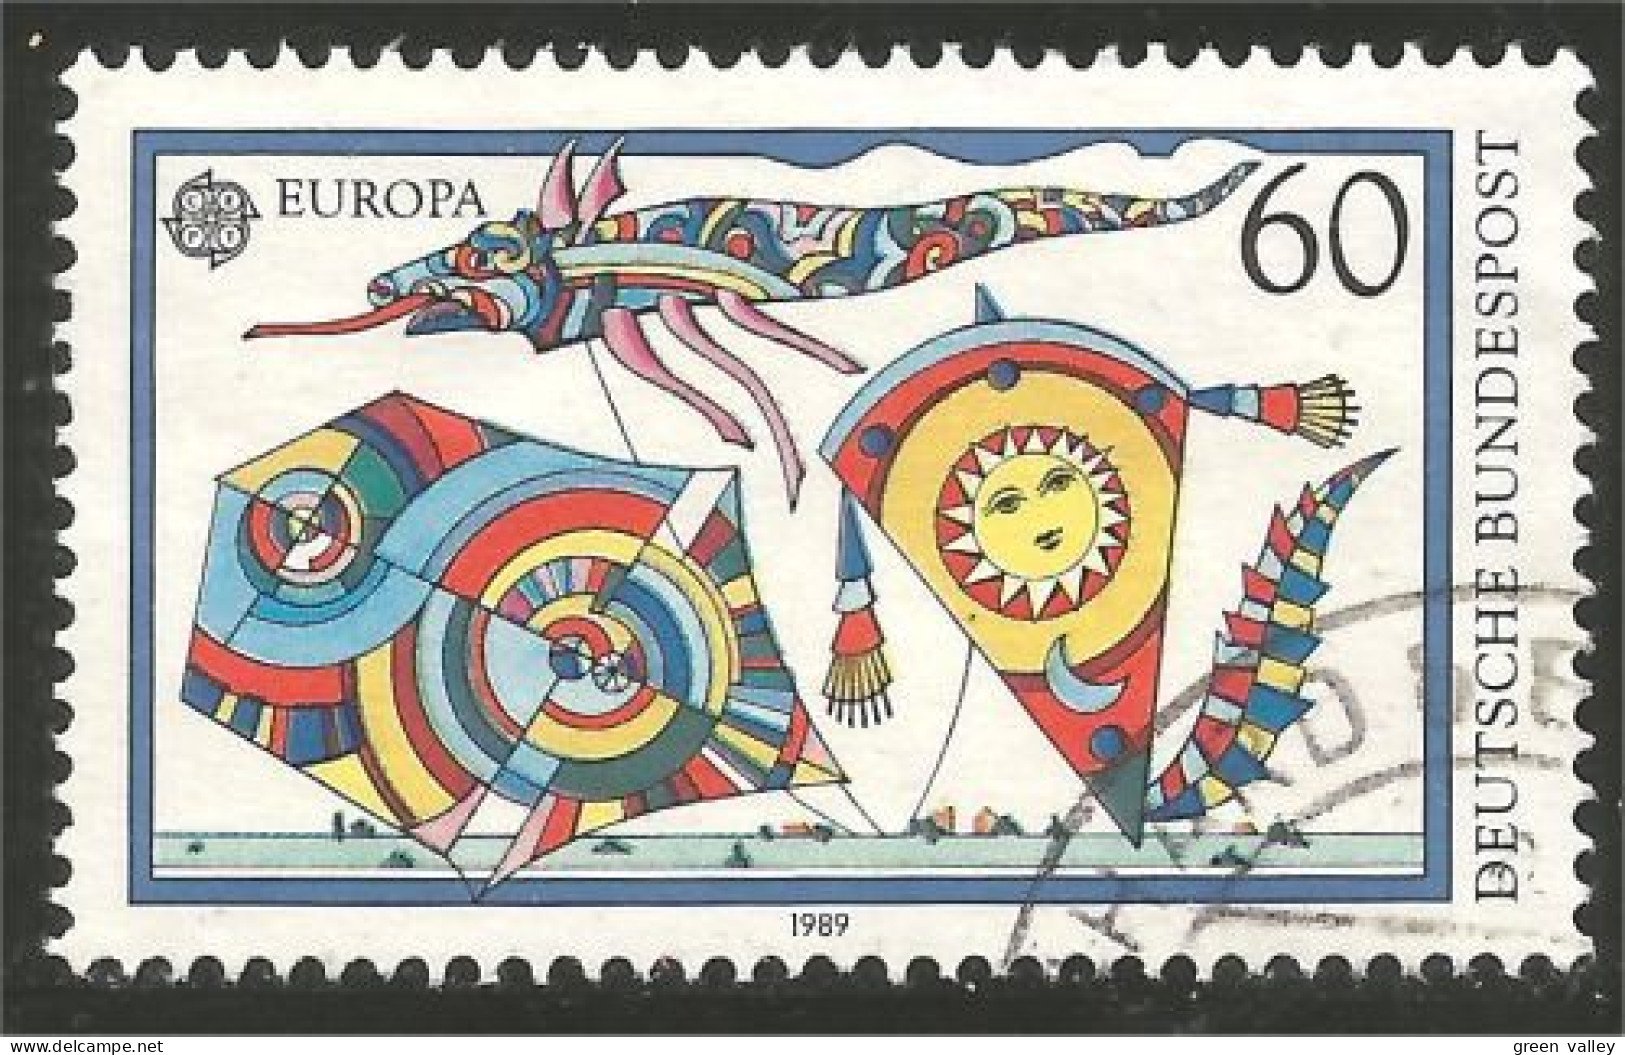 EU89-18c EUROPA-CEPT 1989 Germany Cerf-Volant Kite Jeux Enfants Children Games Kinderspiele - Unclassified